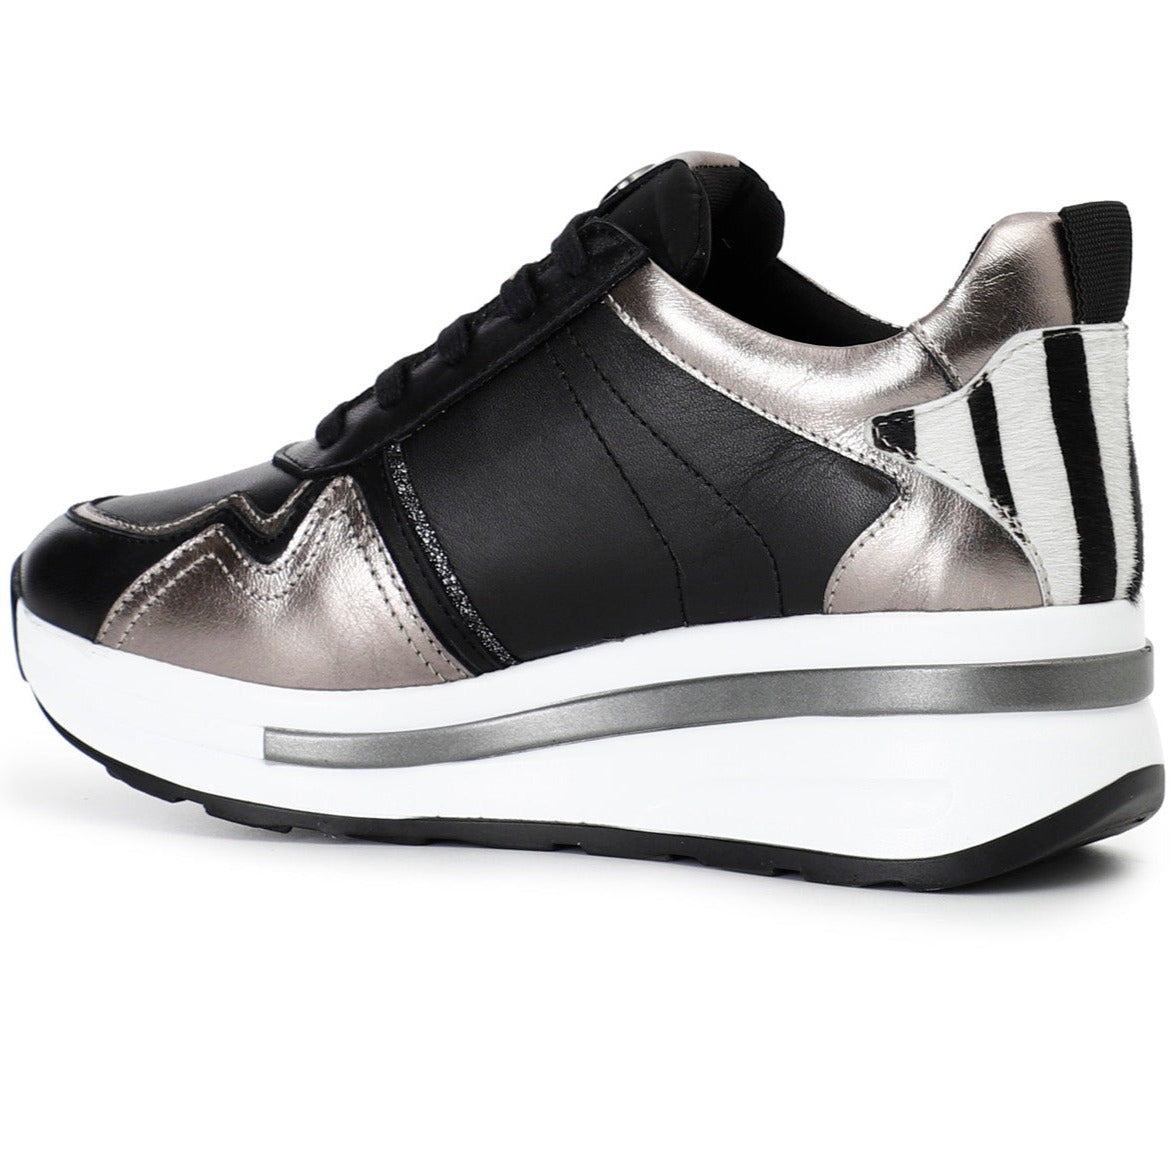 Sneakers CafèNoir woman black platinum leather and calf skin